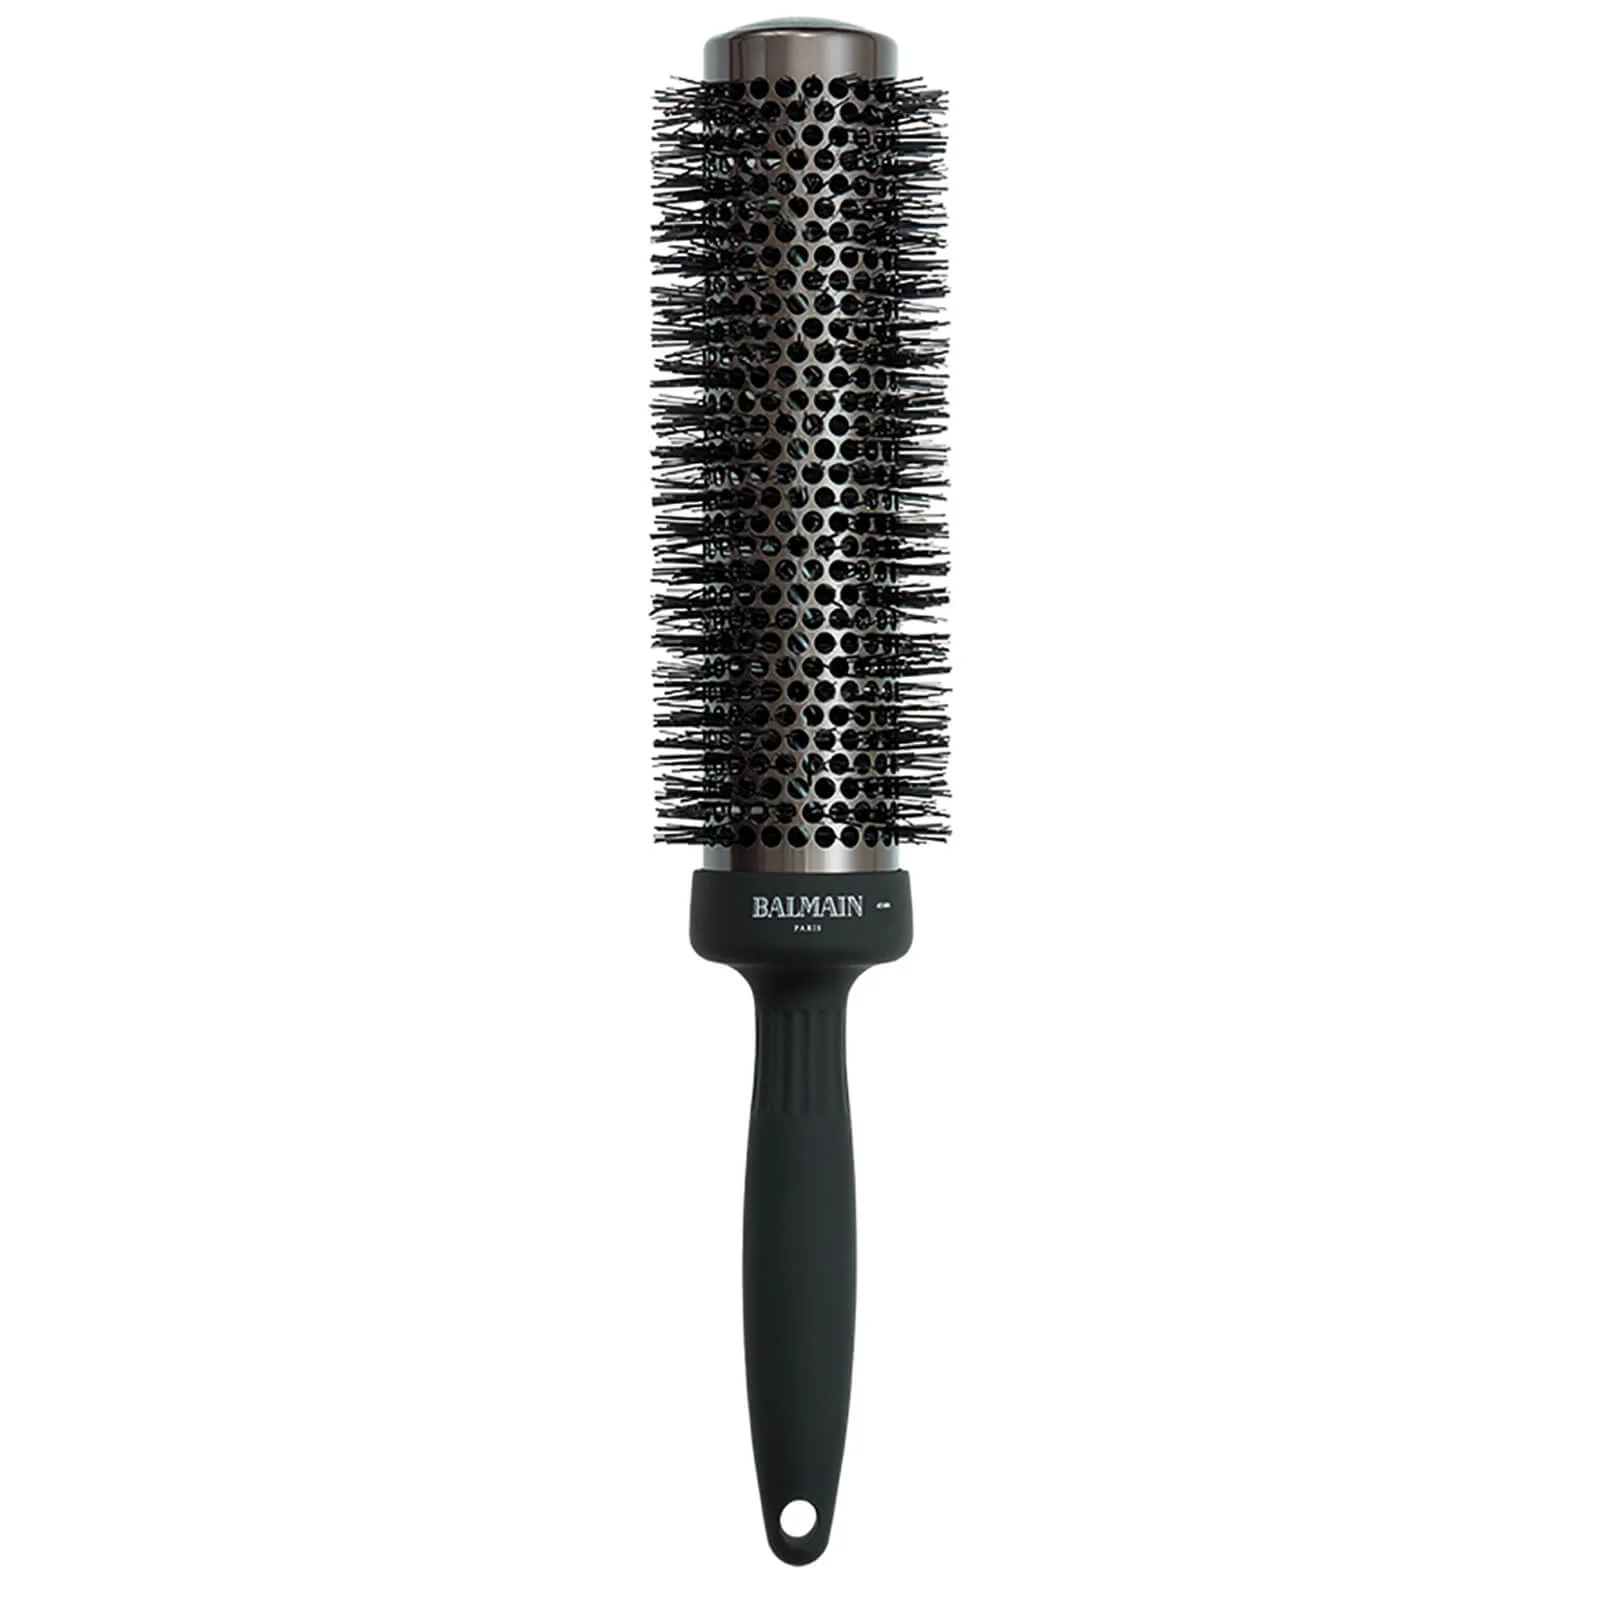 Balmain Professional Ceramic Round Hair Brush XL 43mm - Black Image 1